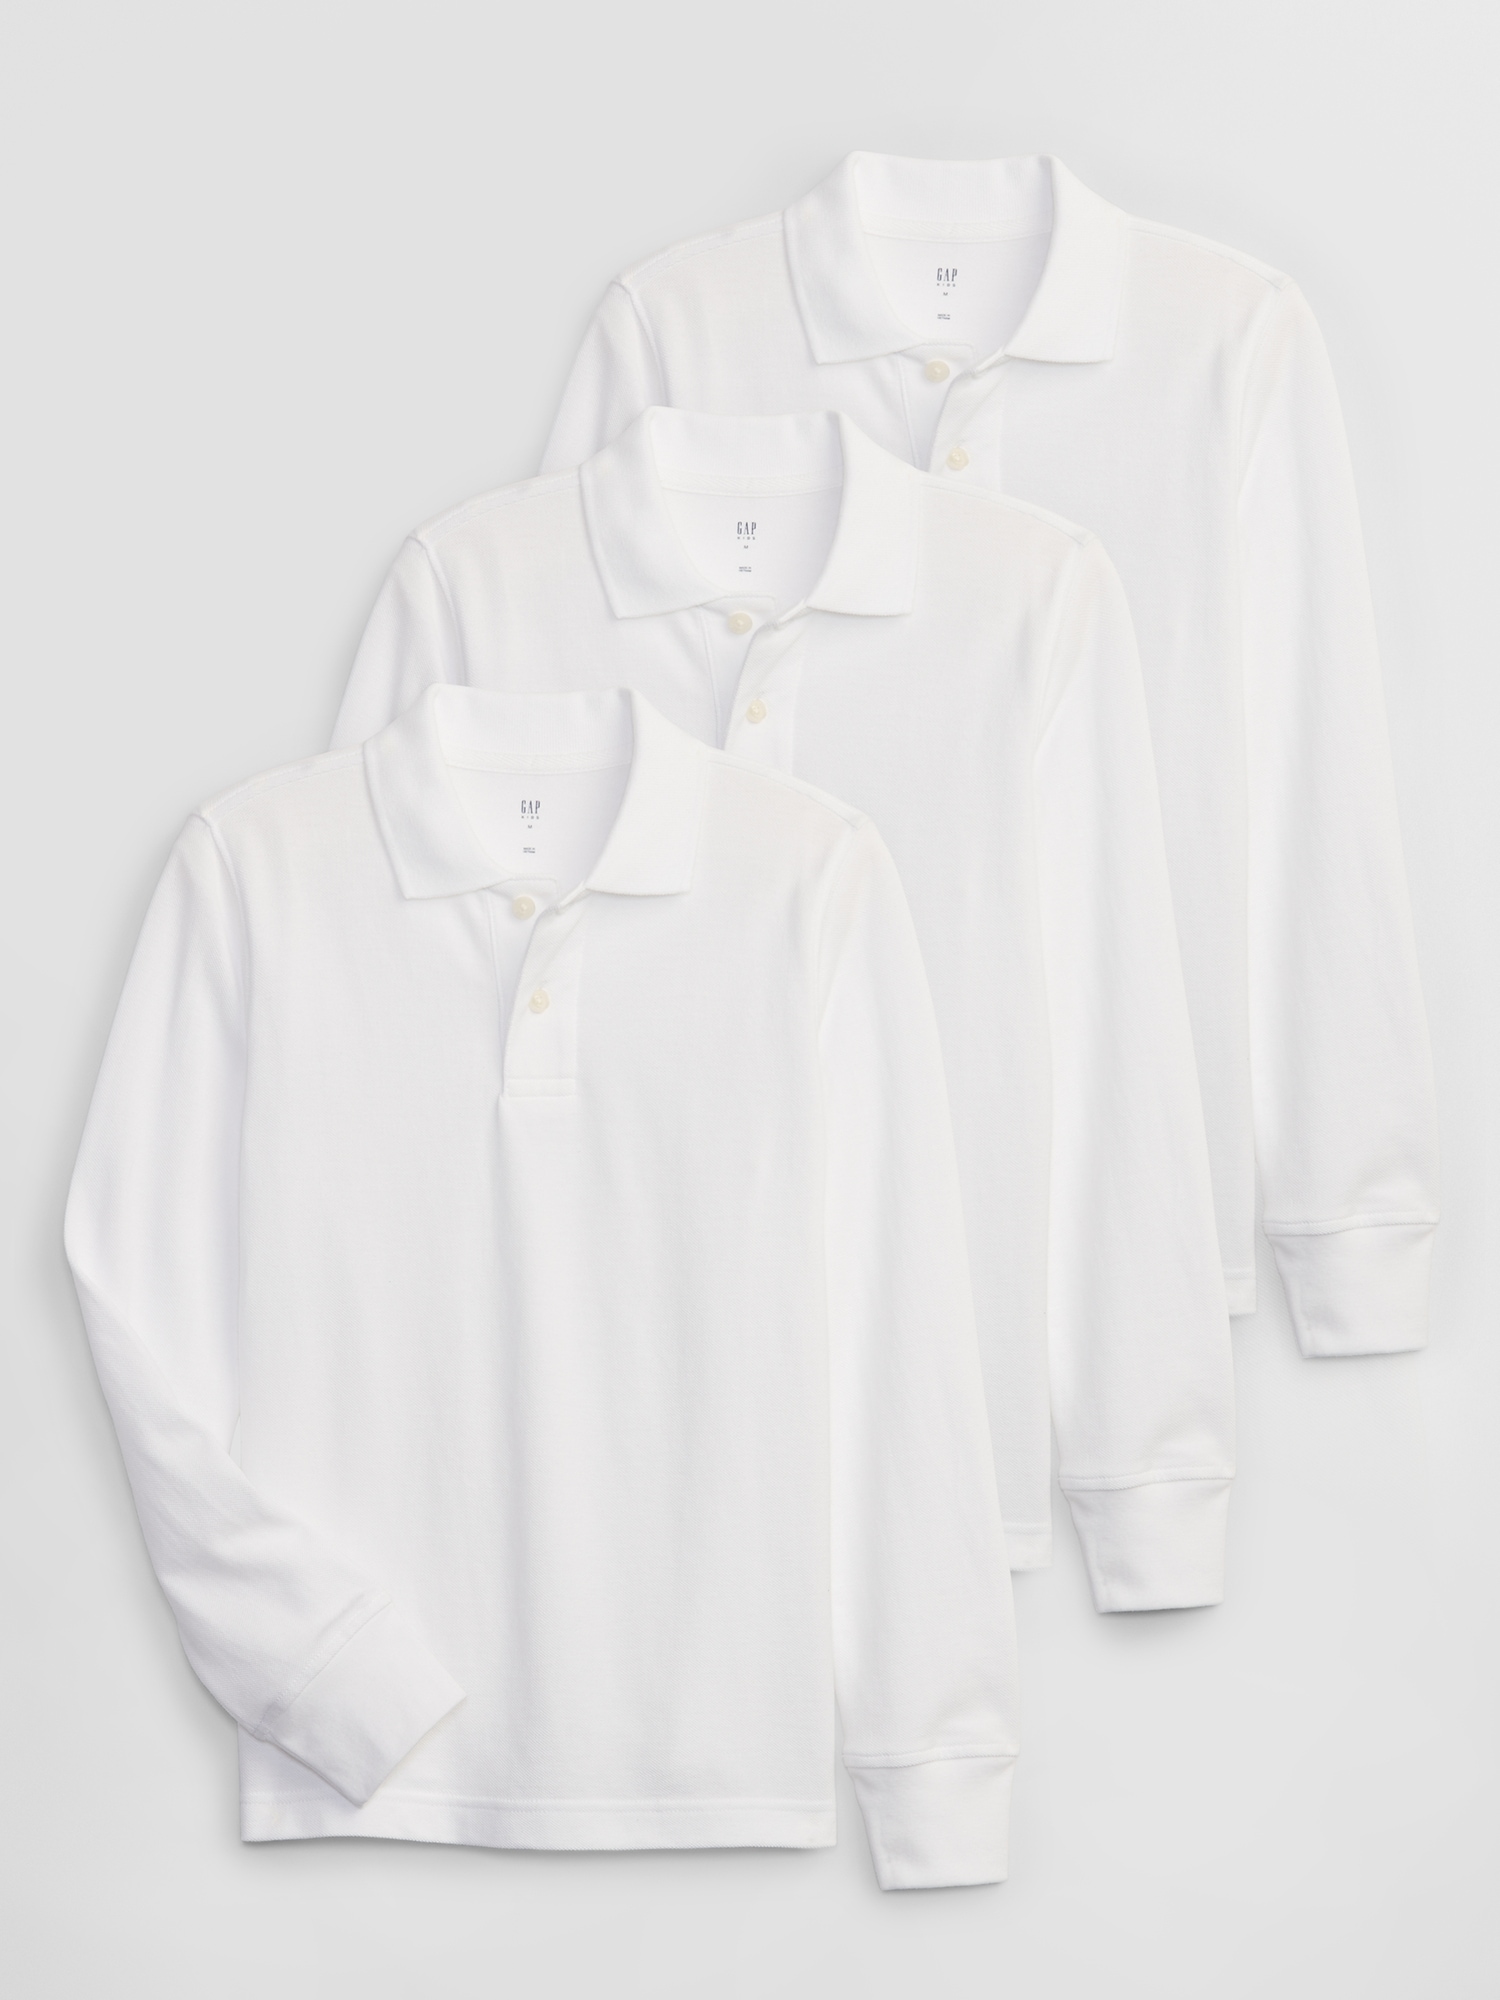 Kids Uniform Polo Shirt (3-Pack) | Gap Factory